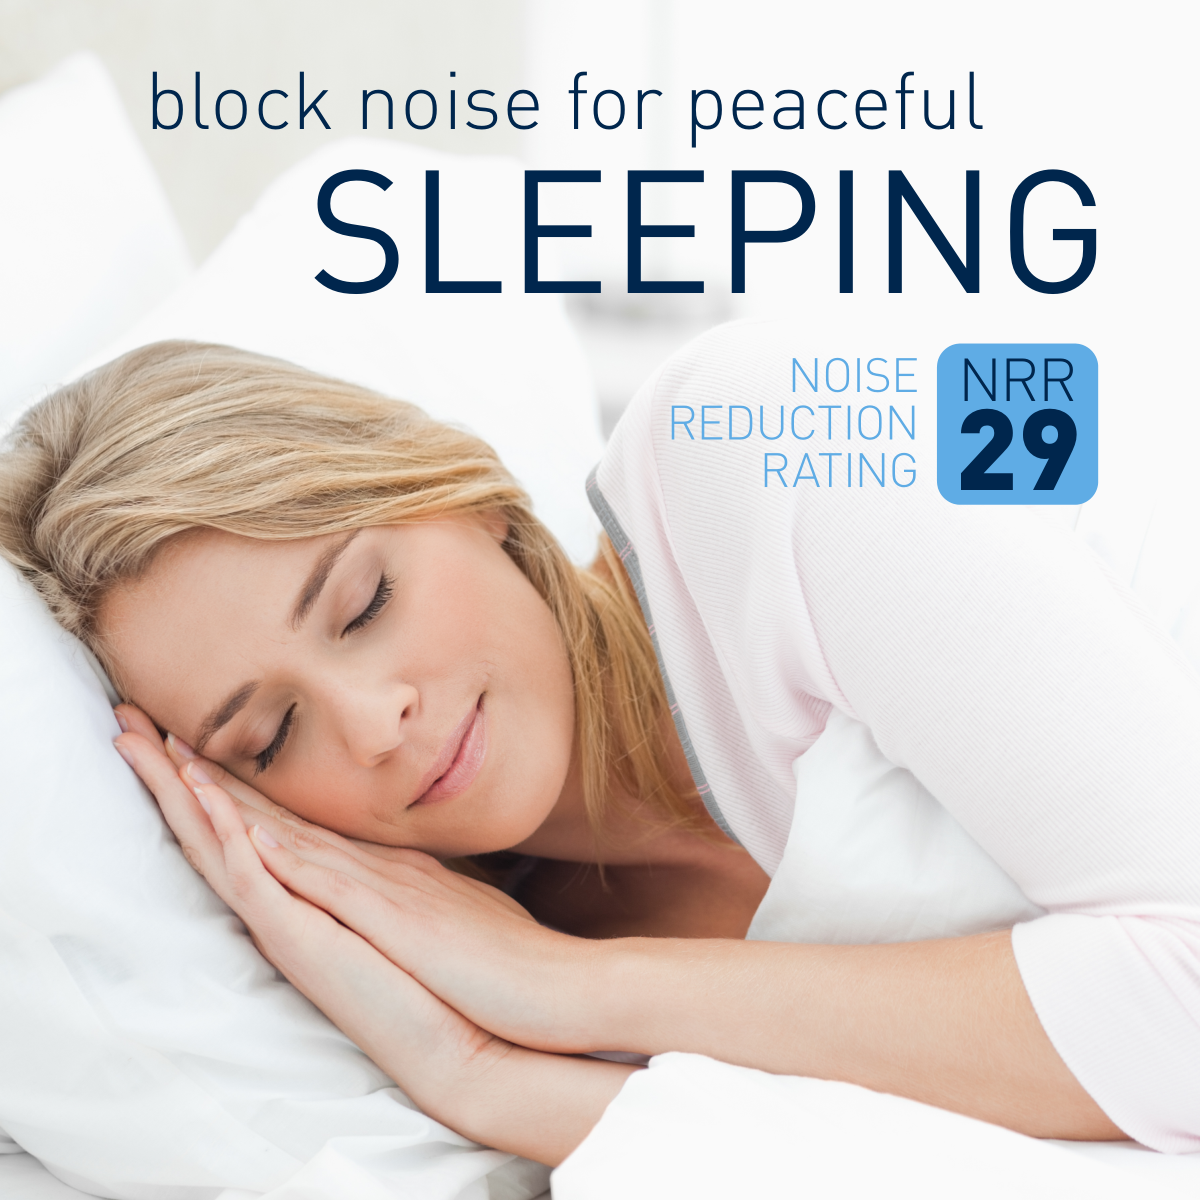 Flents® PROTECHS™ Super Sleep® Ear Plugs